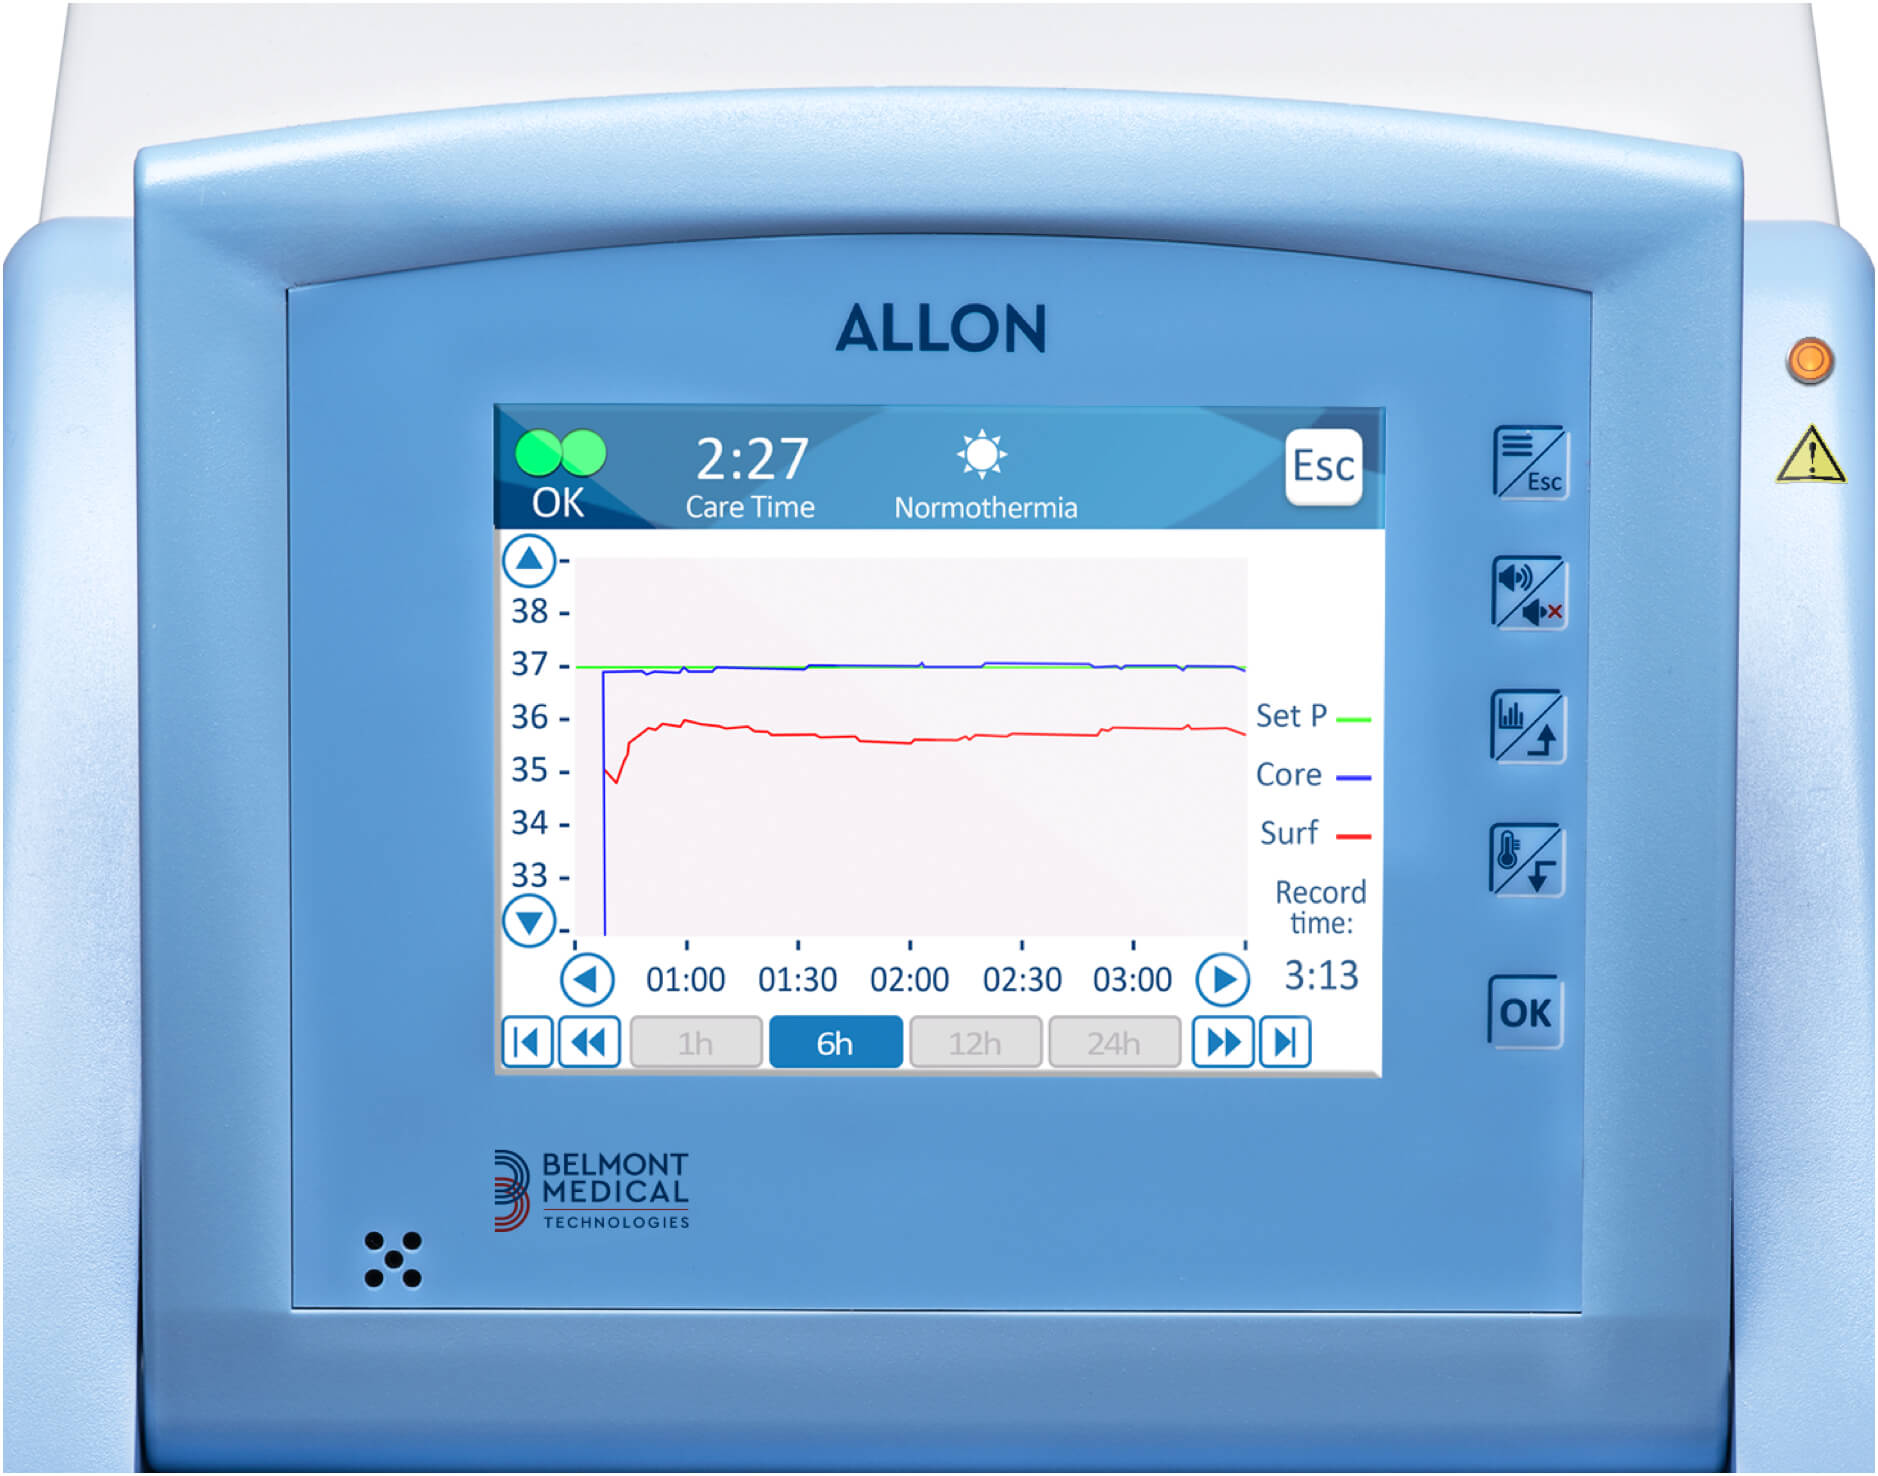 Allon touch screen showing patient temperature